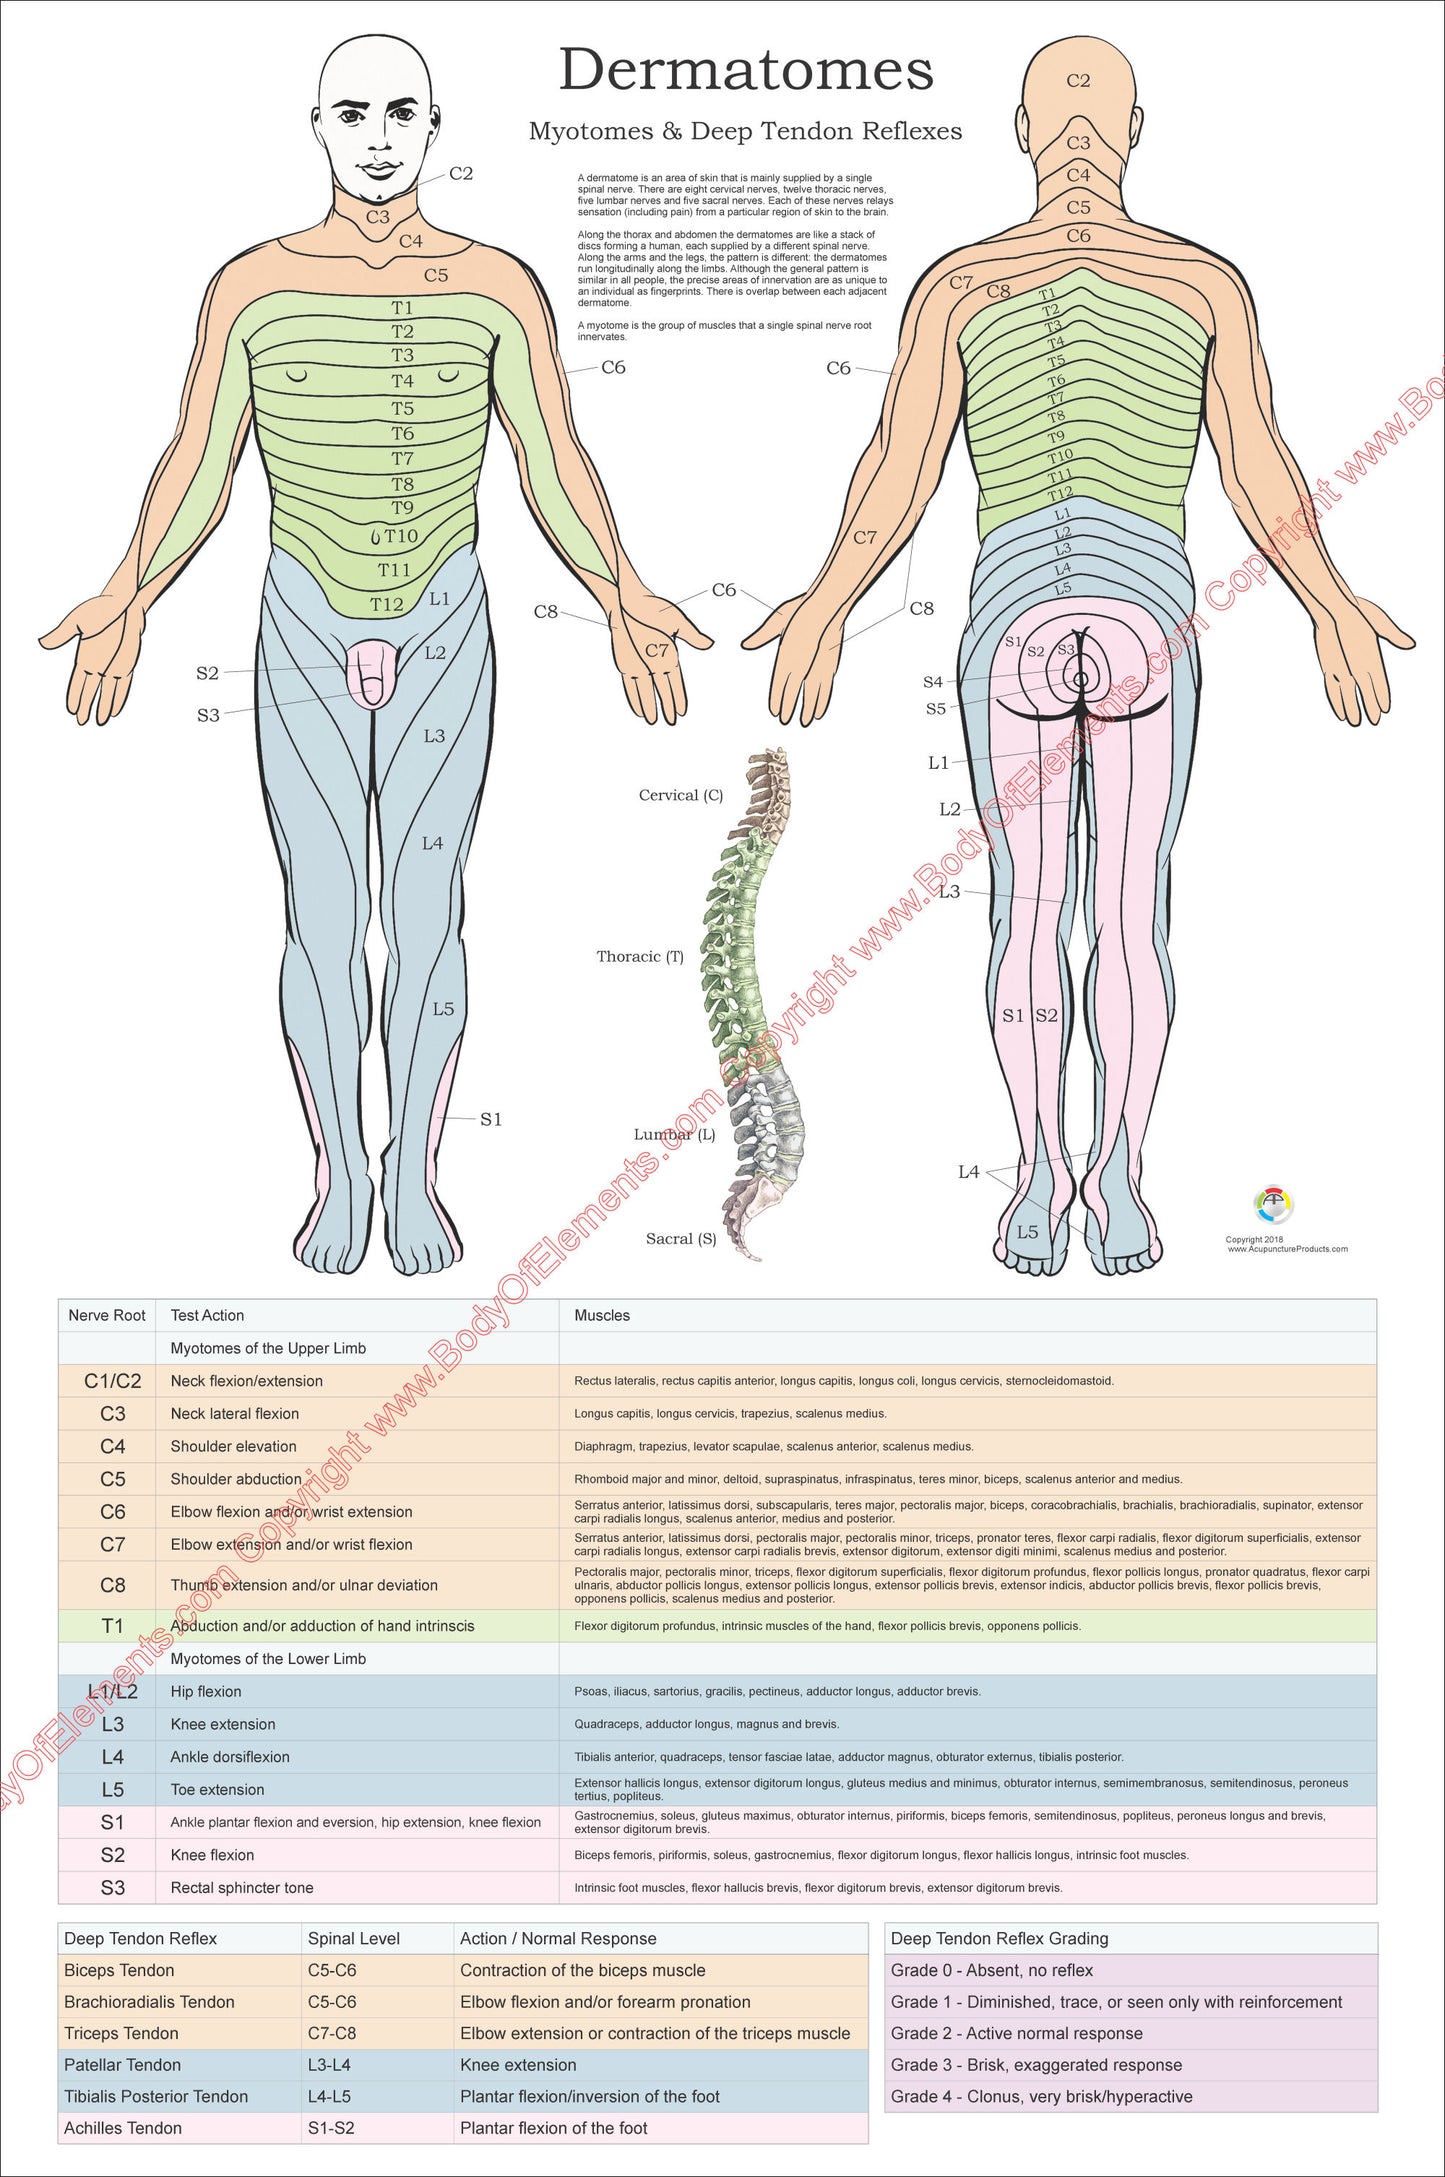 Dermatomes myotomes and deep tendon reflexes poster